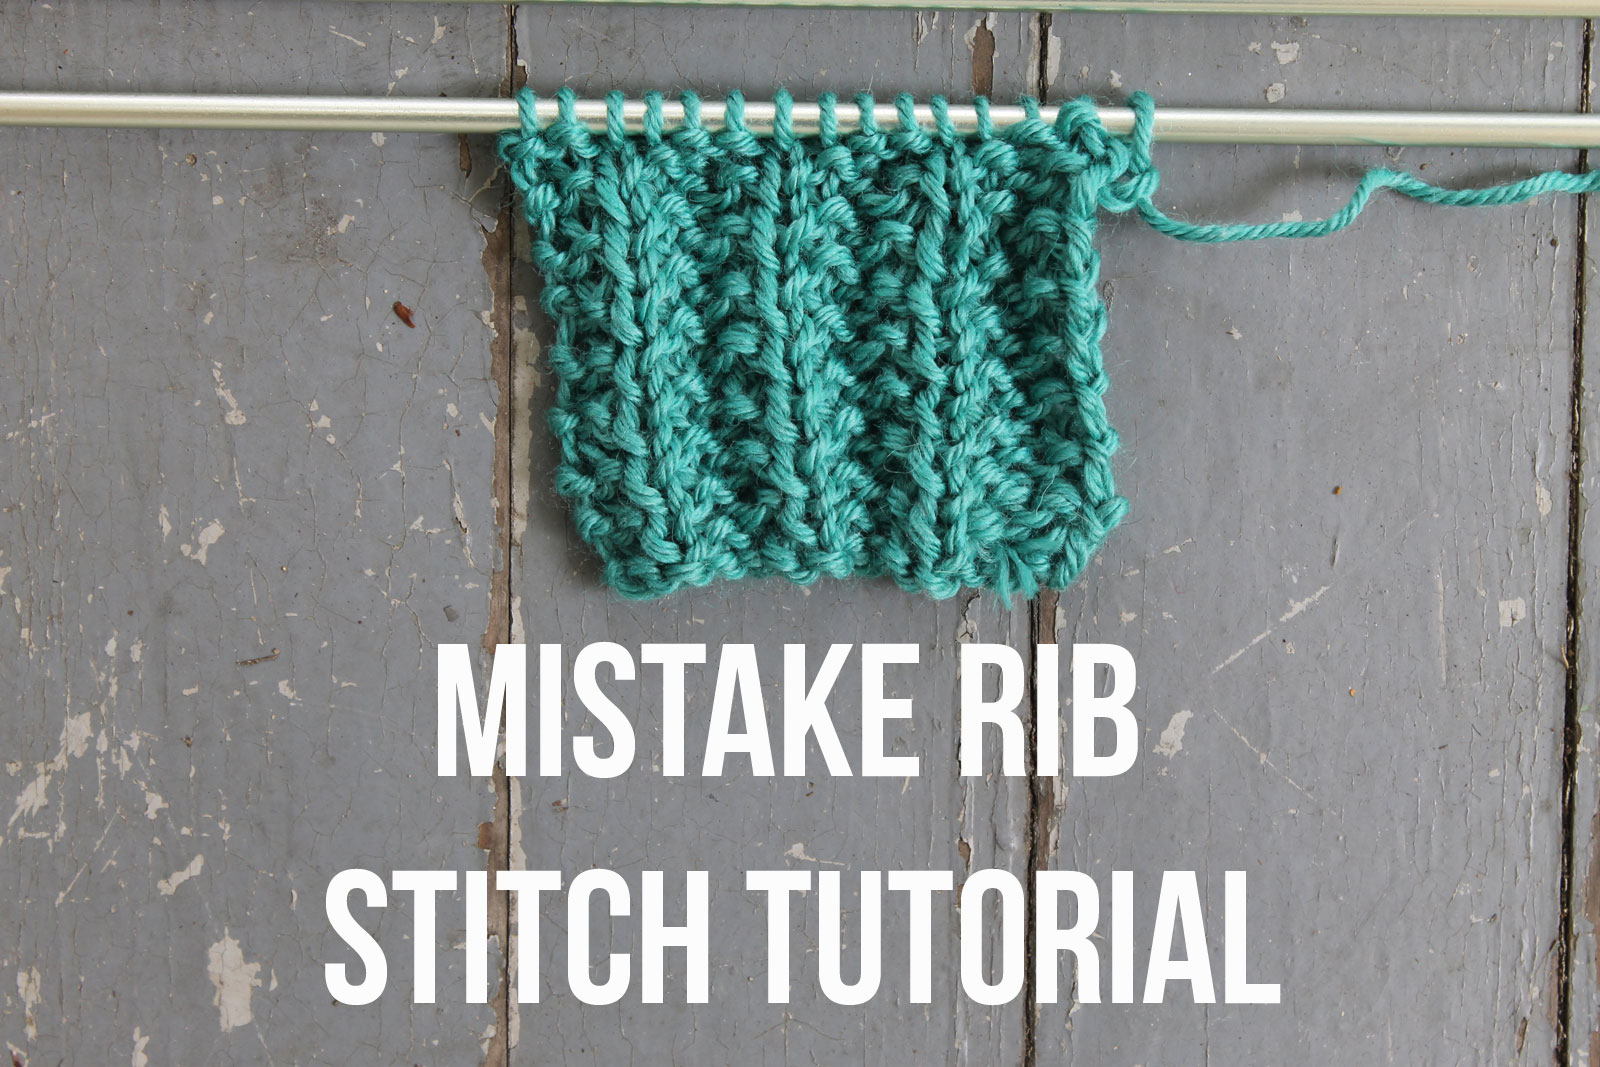 Mistake rib stitch tutorial